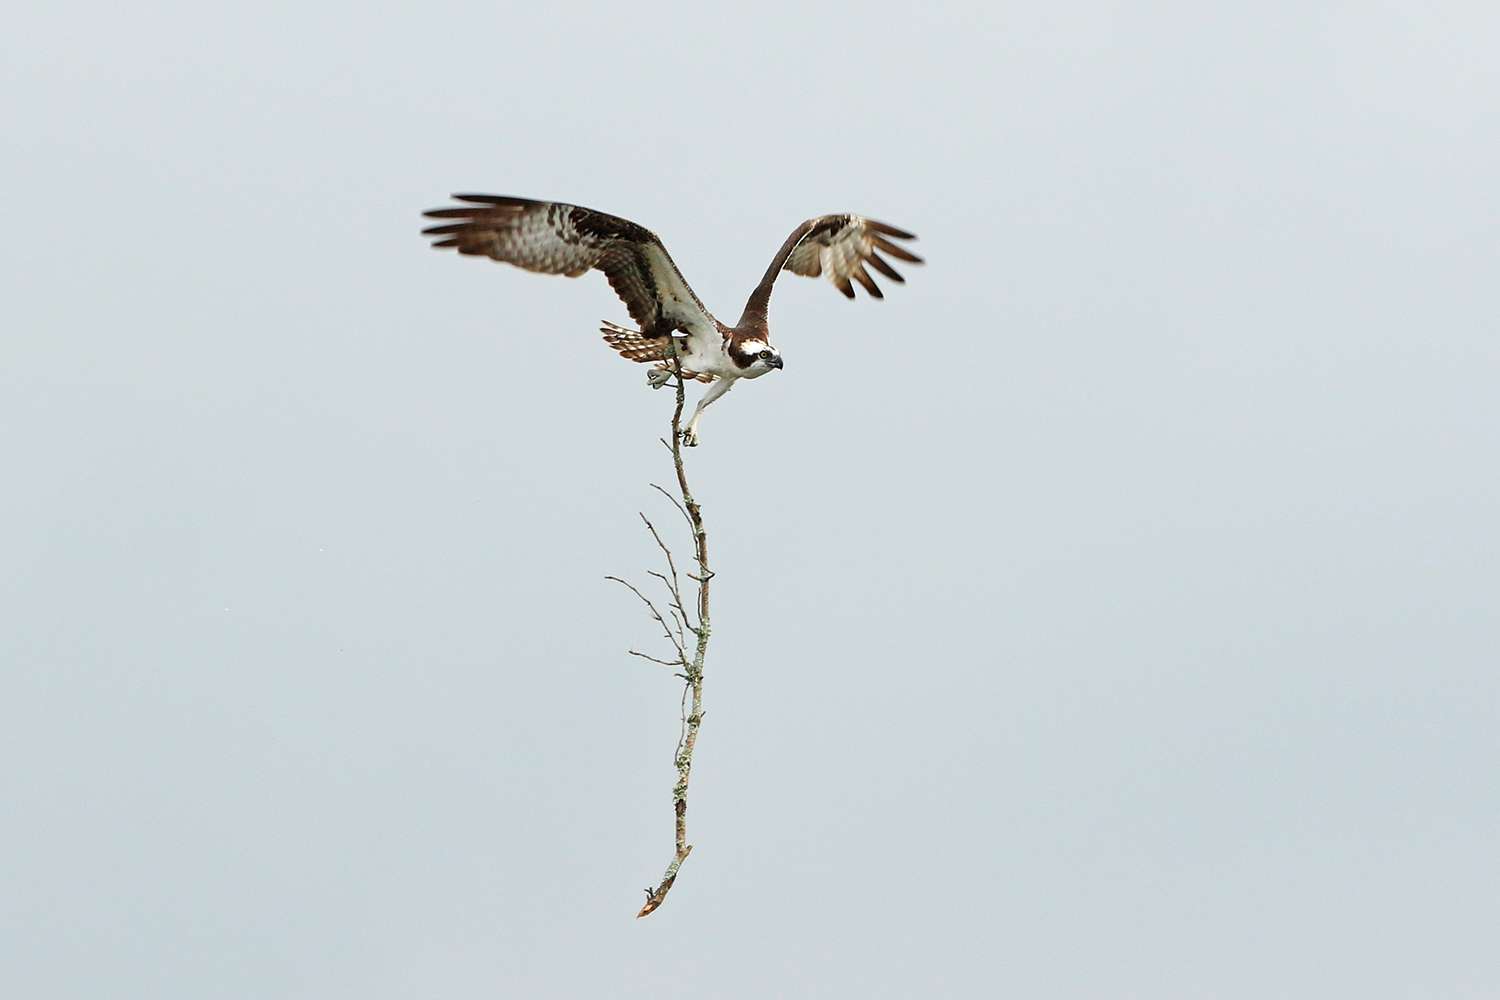 At the Guntersville Bassmaster Elite in 2019, this osprey was caught building a nest. 